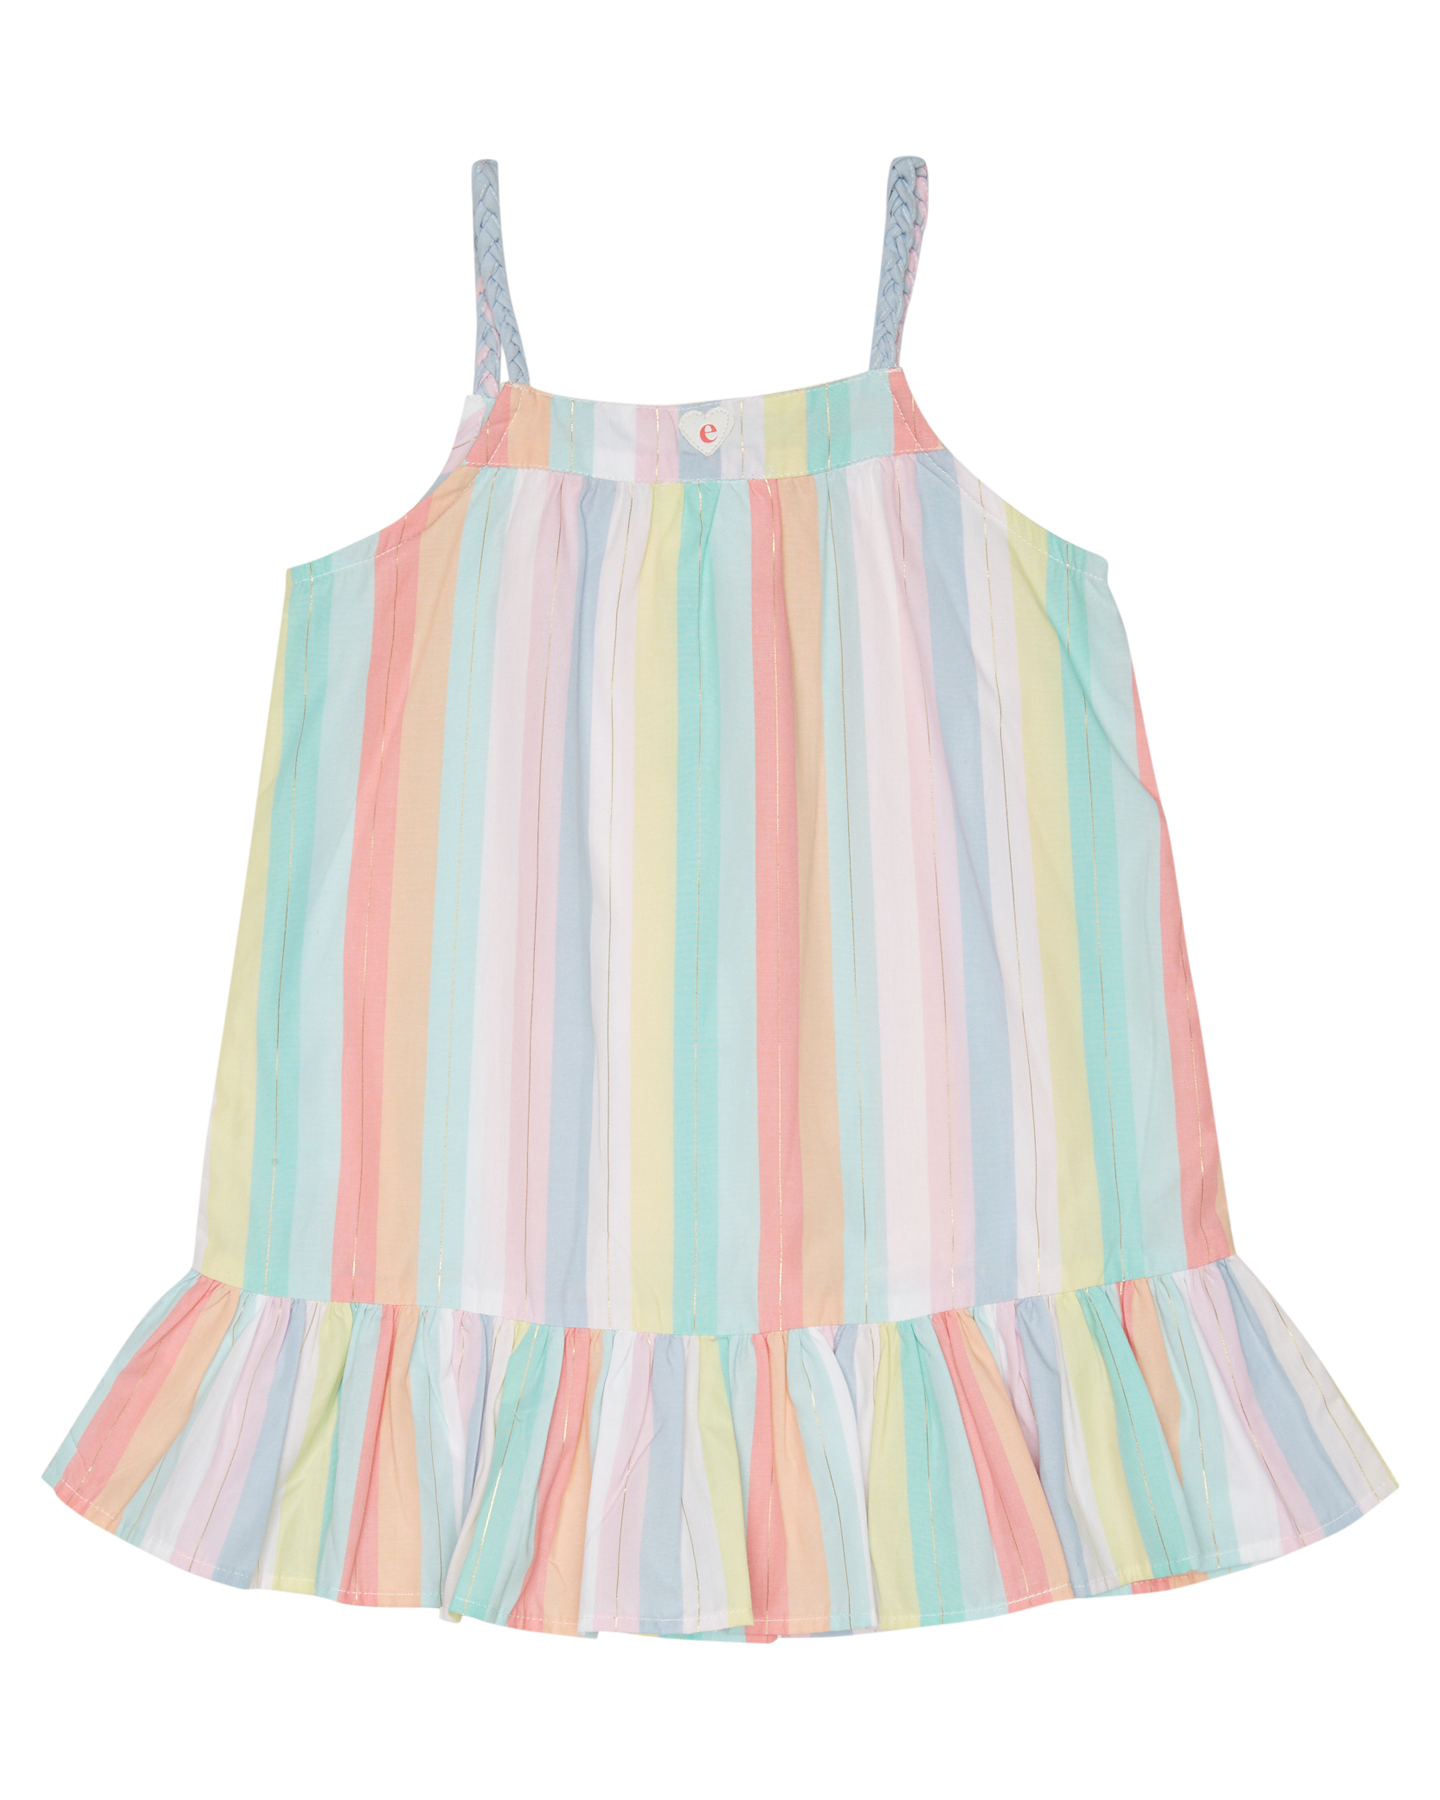 Eves Sister Tots Girls Carnival Dress - Multi Stripe | SurfStitch